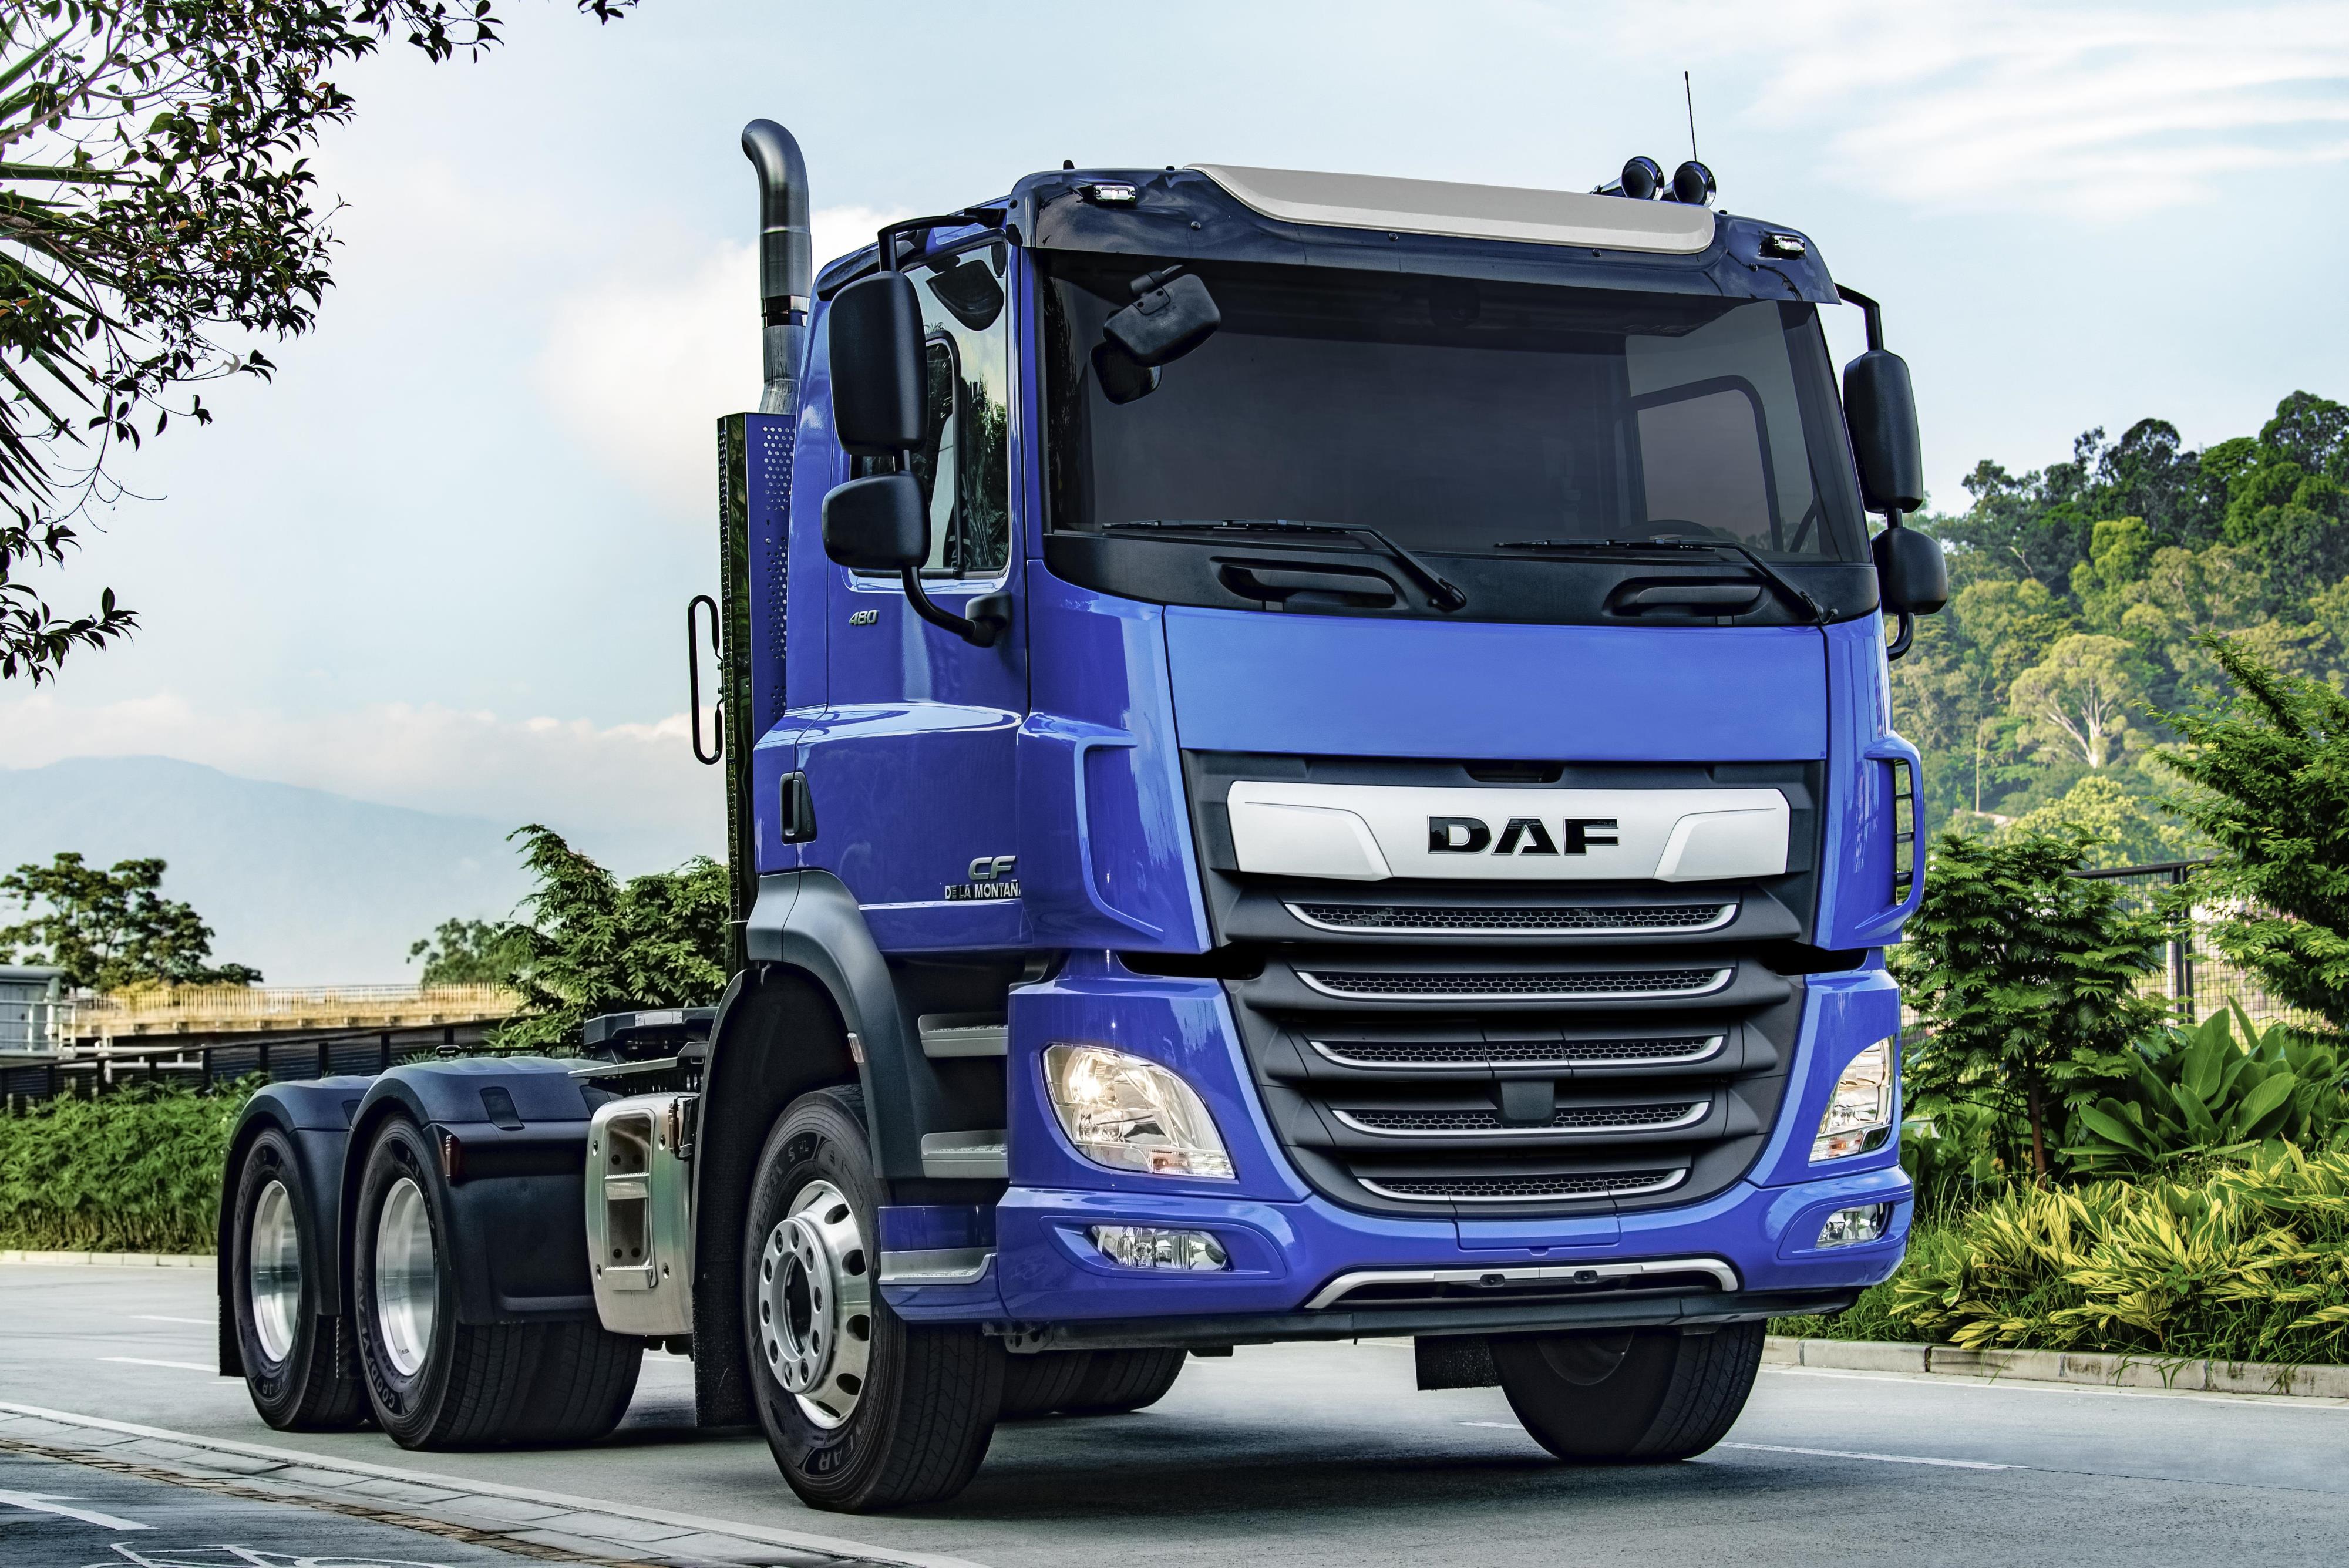 https://www.daftrucks.de/-/media/images/press-releases/deliveries/2021/01-daf-to-ship-200-heavyduty-trucks-to-colombia.jpg?rev=c76d8ee1635f4afcb08826f1f44f3103